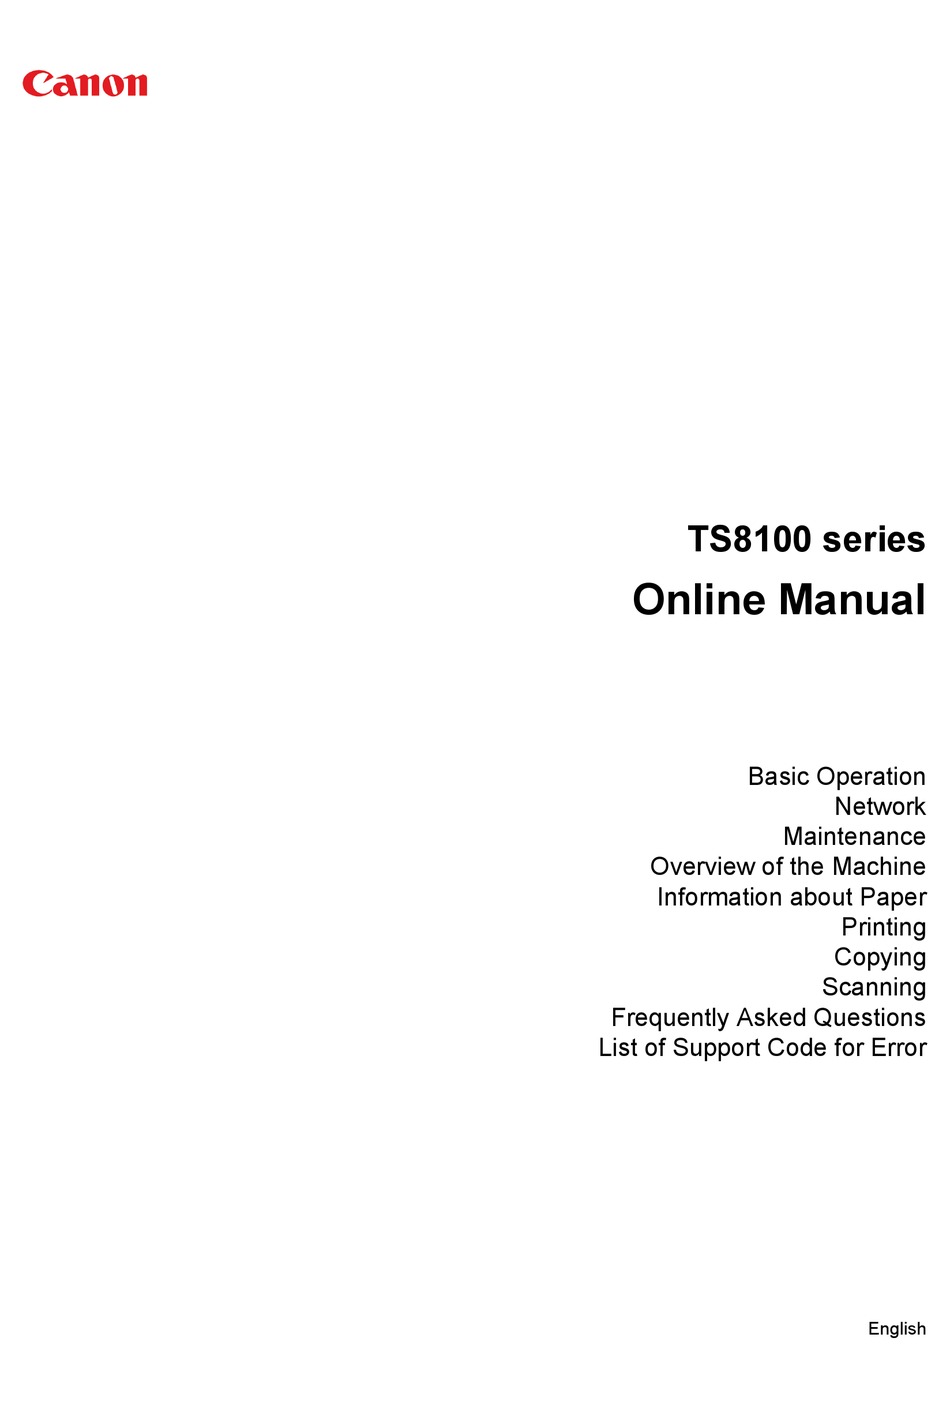 CANON TS8100 SERIES ONLINE MANUAL Pdf Download | ManualsLib